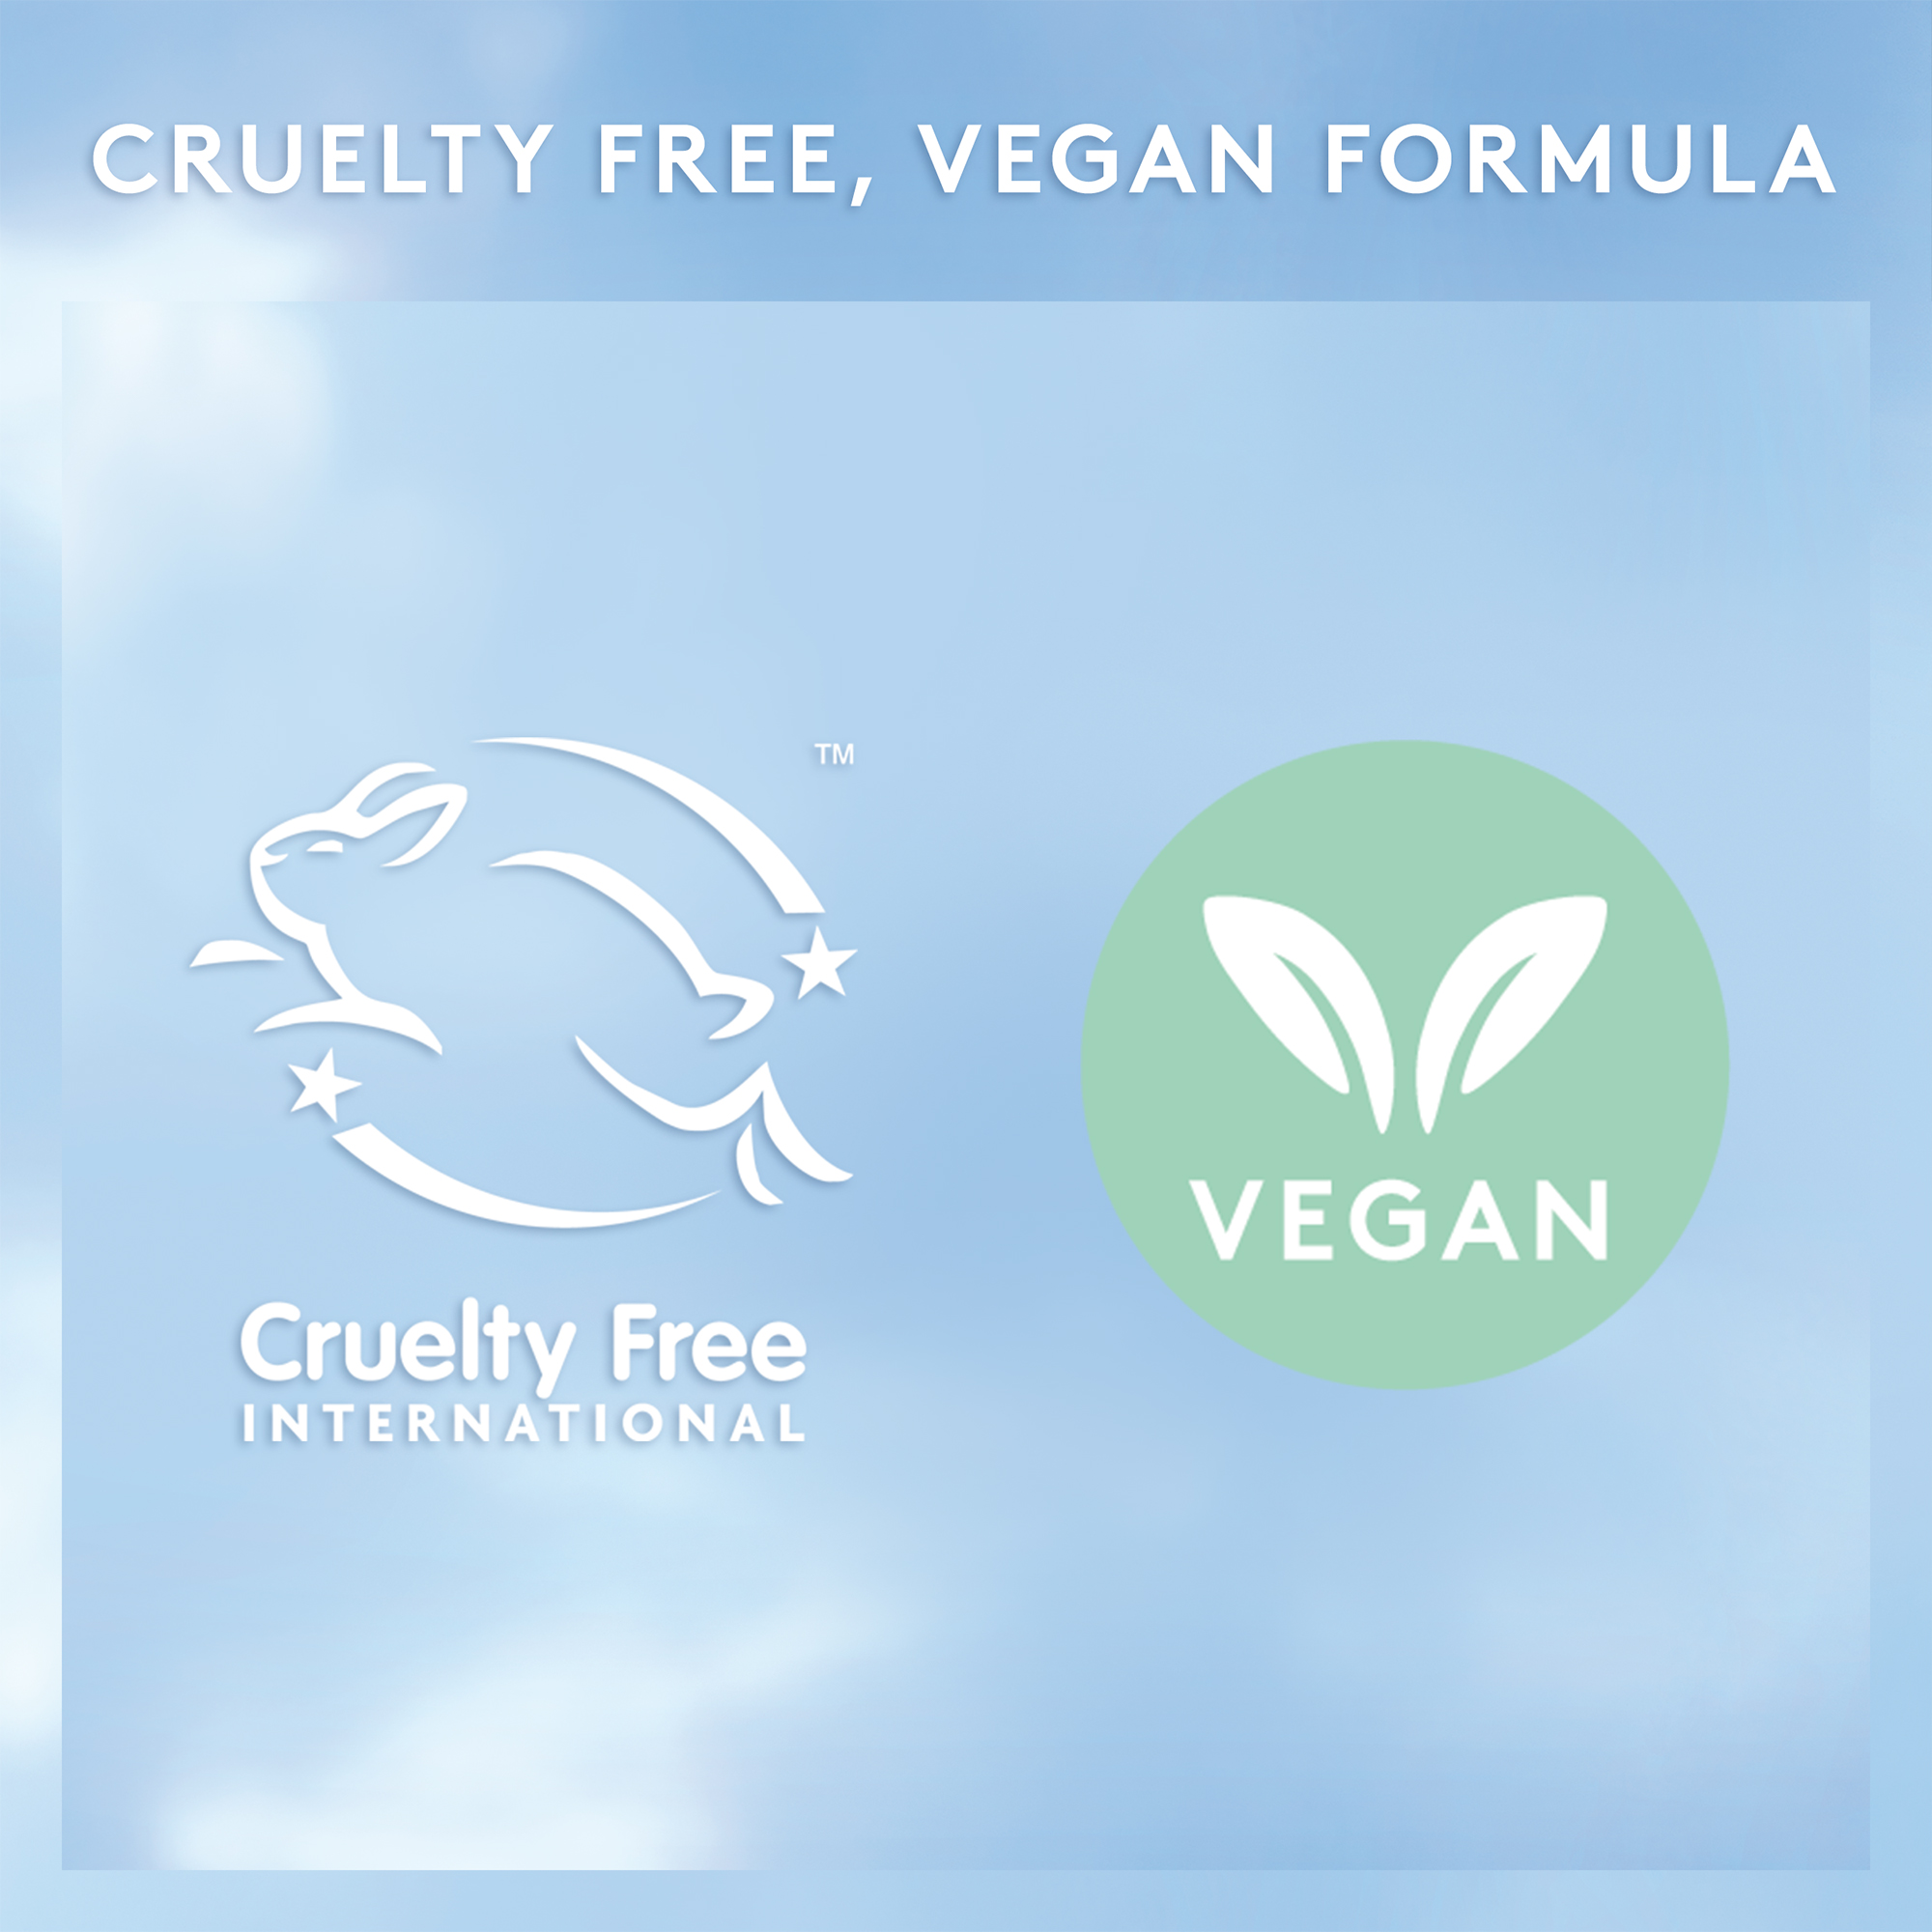 Cruelty free vegan formula